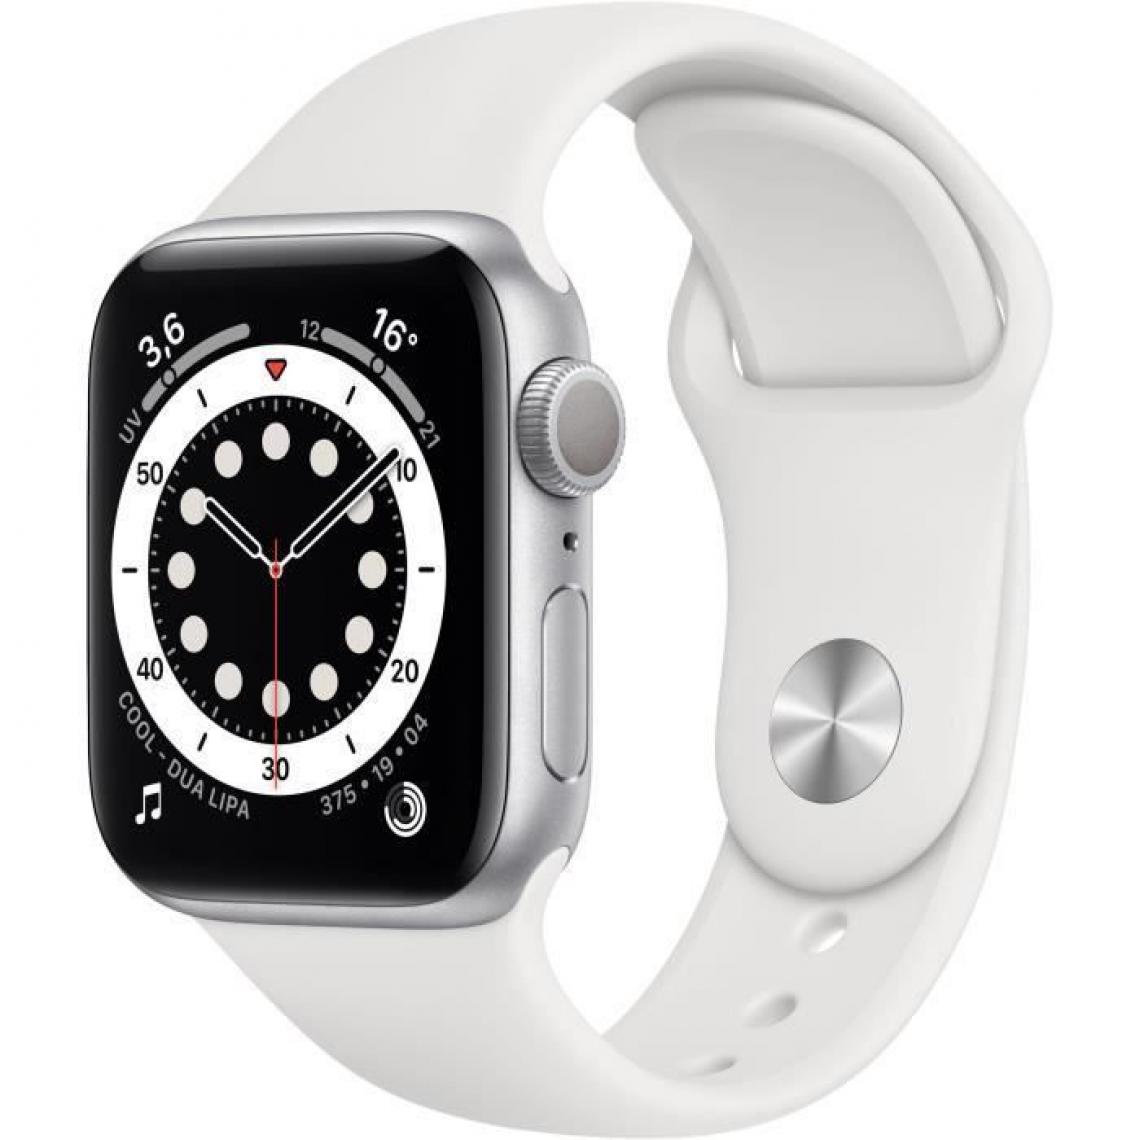 Apple - Apple Watch Series 6 GPS, 40mm Boîtier en Aluminium Argent avec Bracelet Sport Blanc - Apple Watch